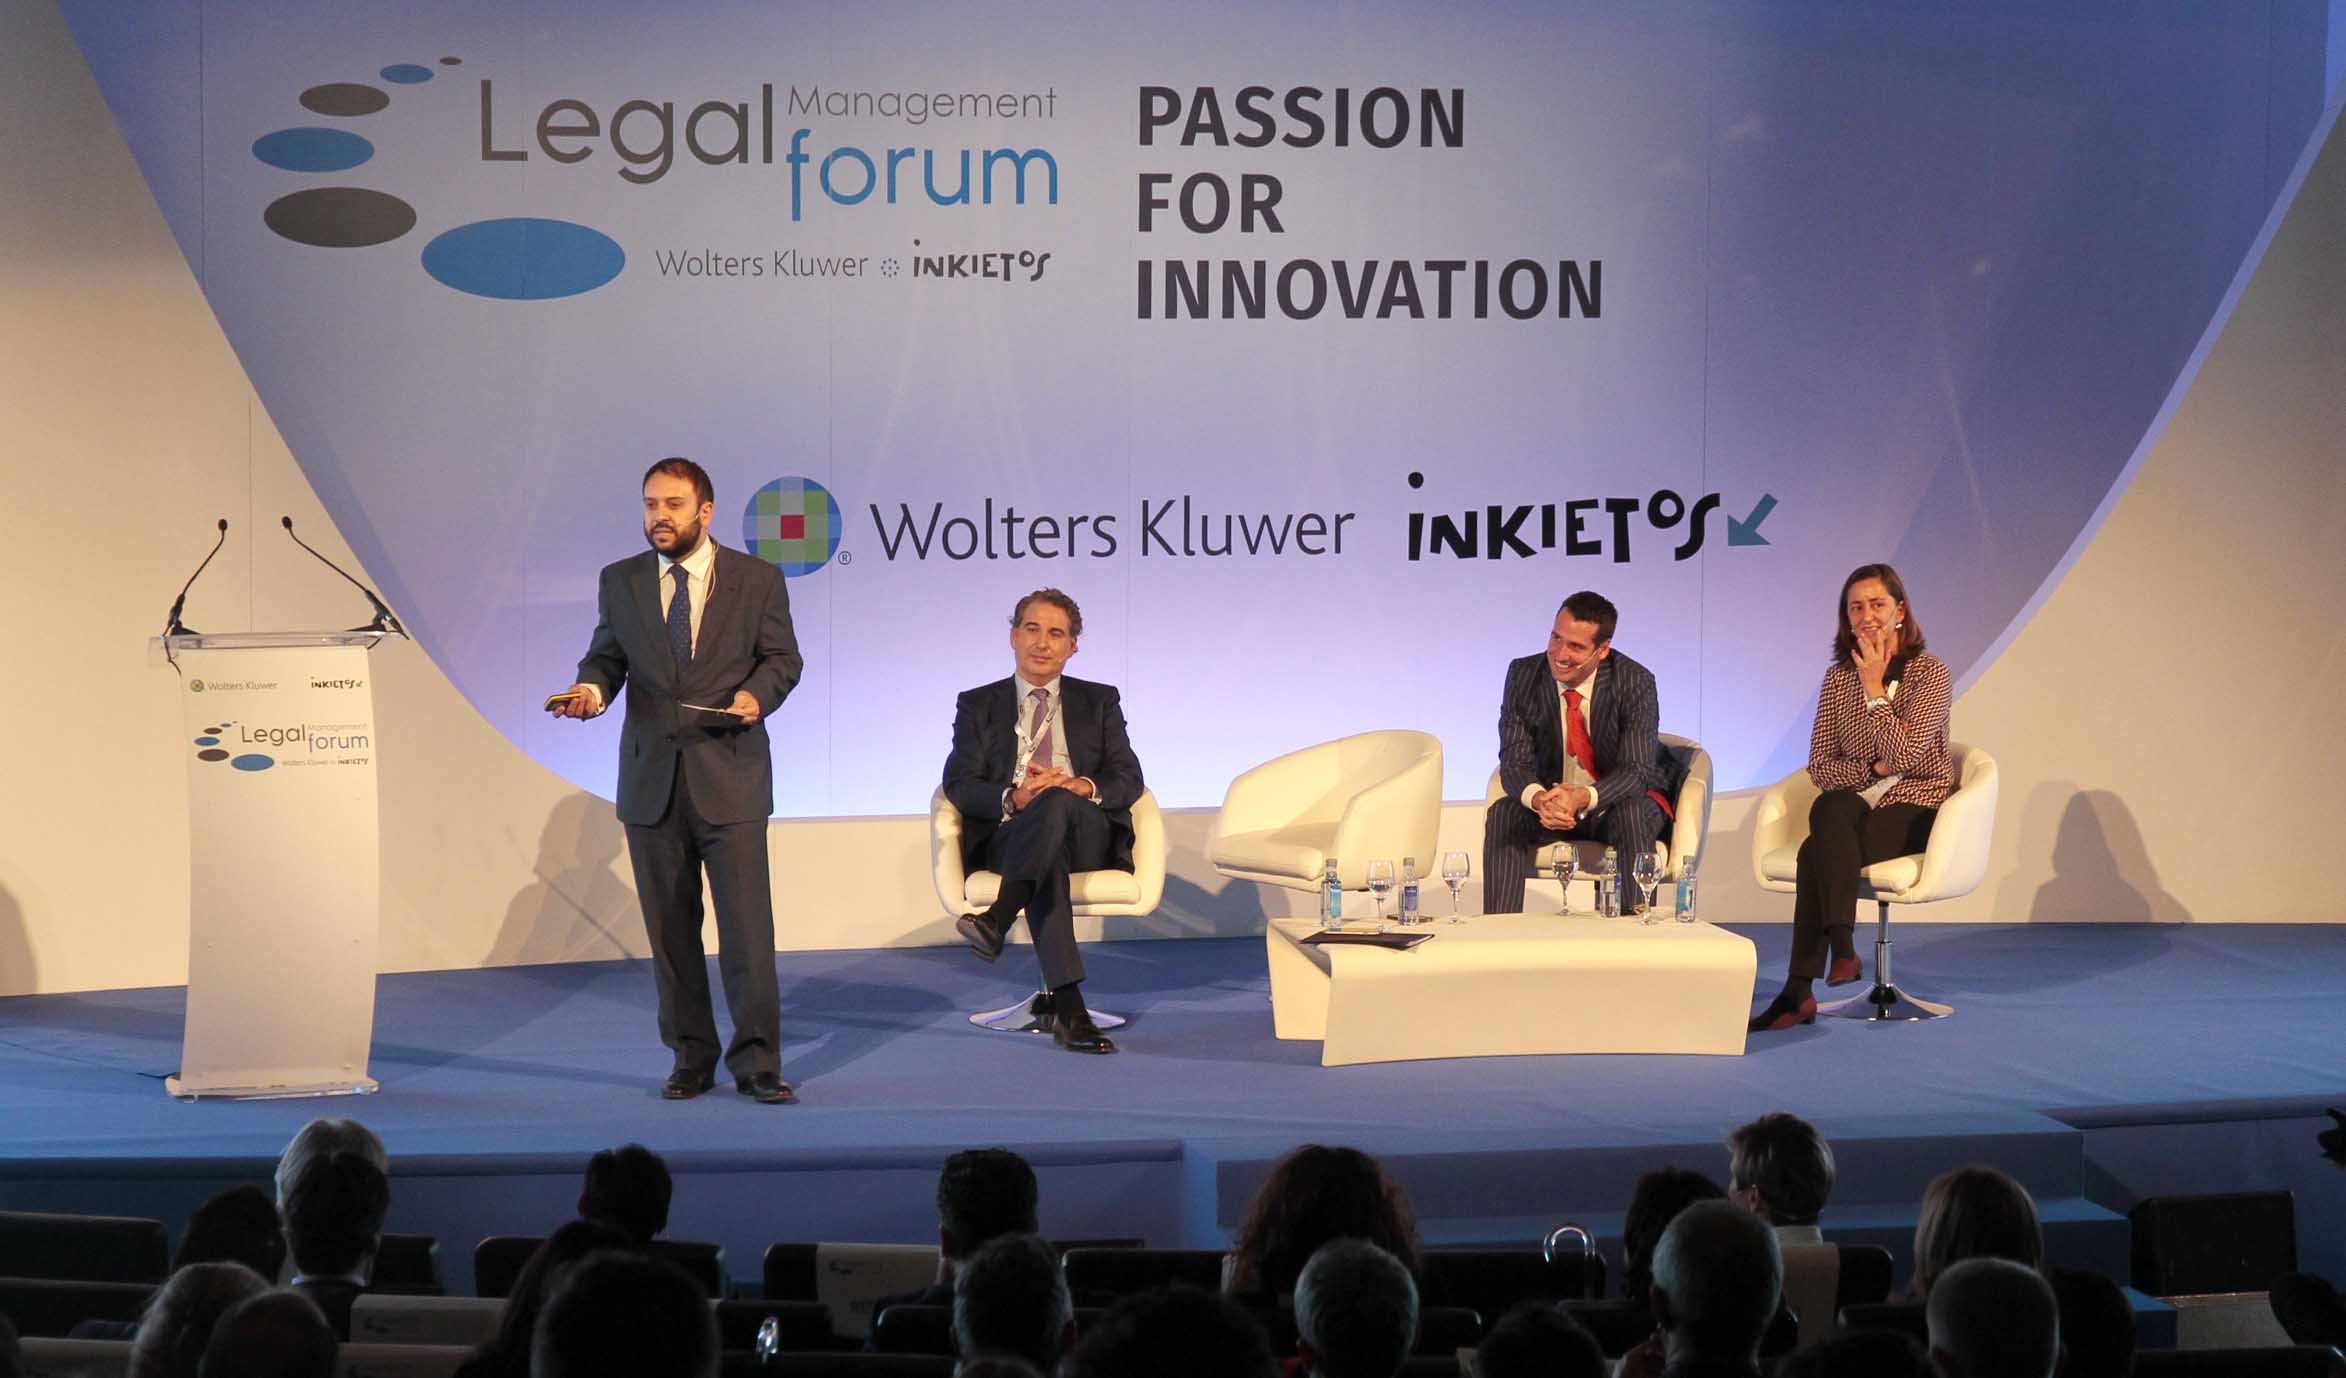 El Legal Management Forum 2016 fue casi perfecto, sólo faltó Arriaga